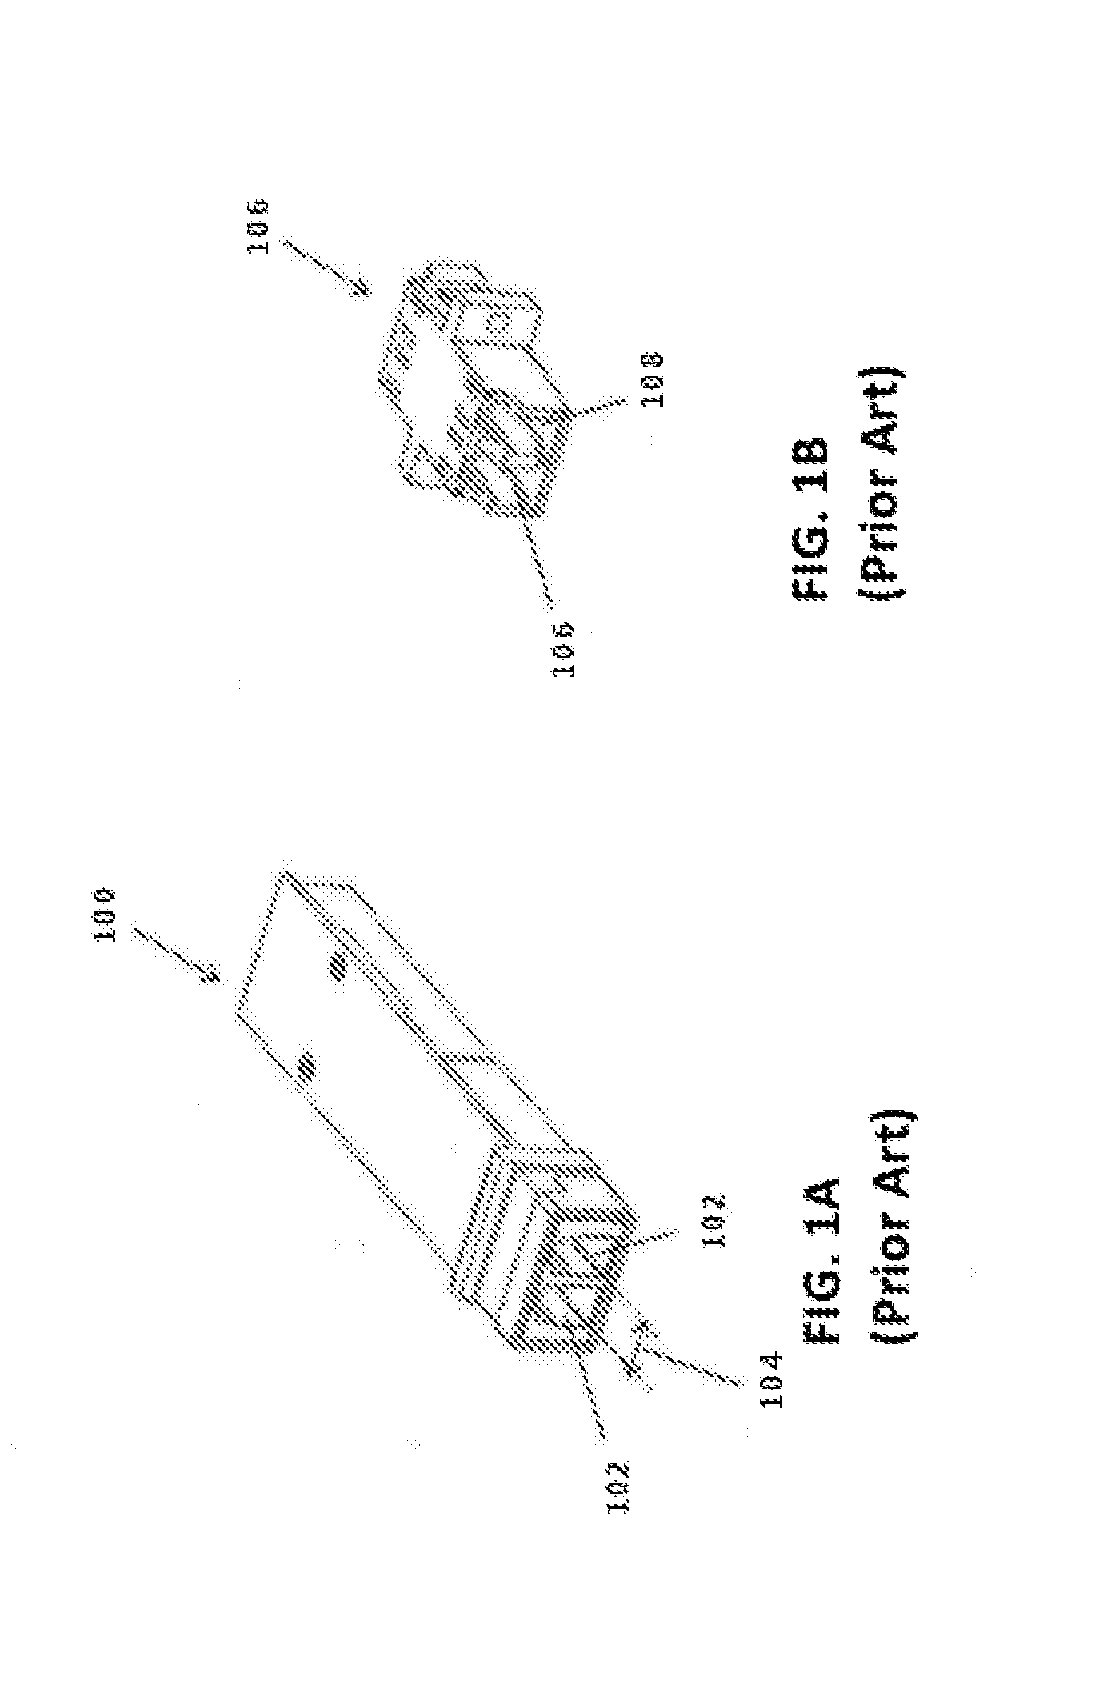 Ultra-small form factor optical connectors